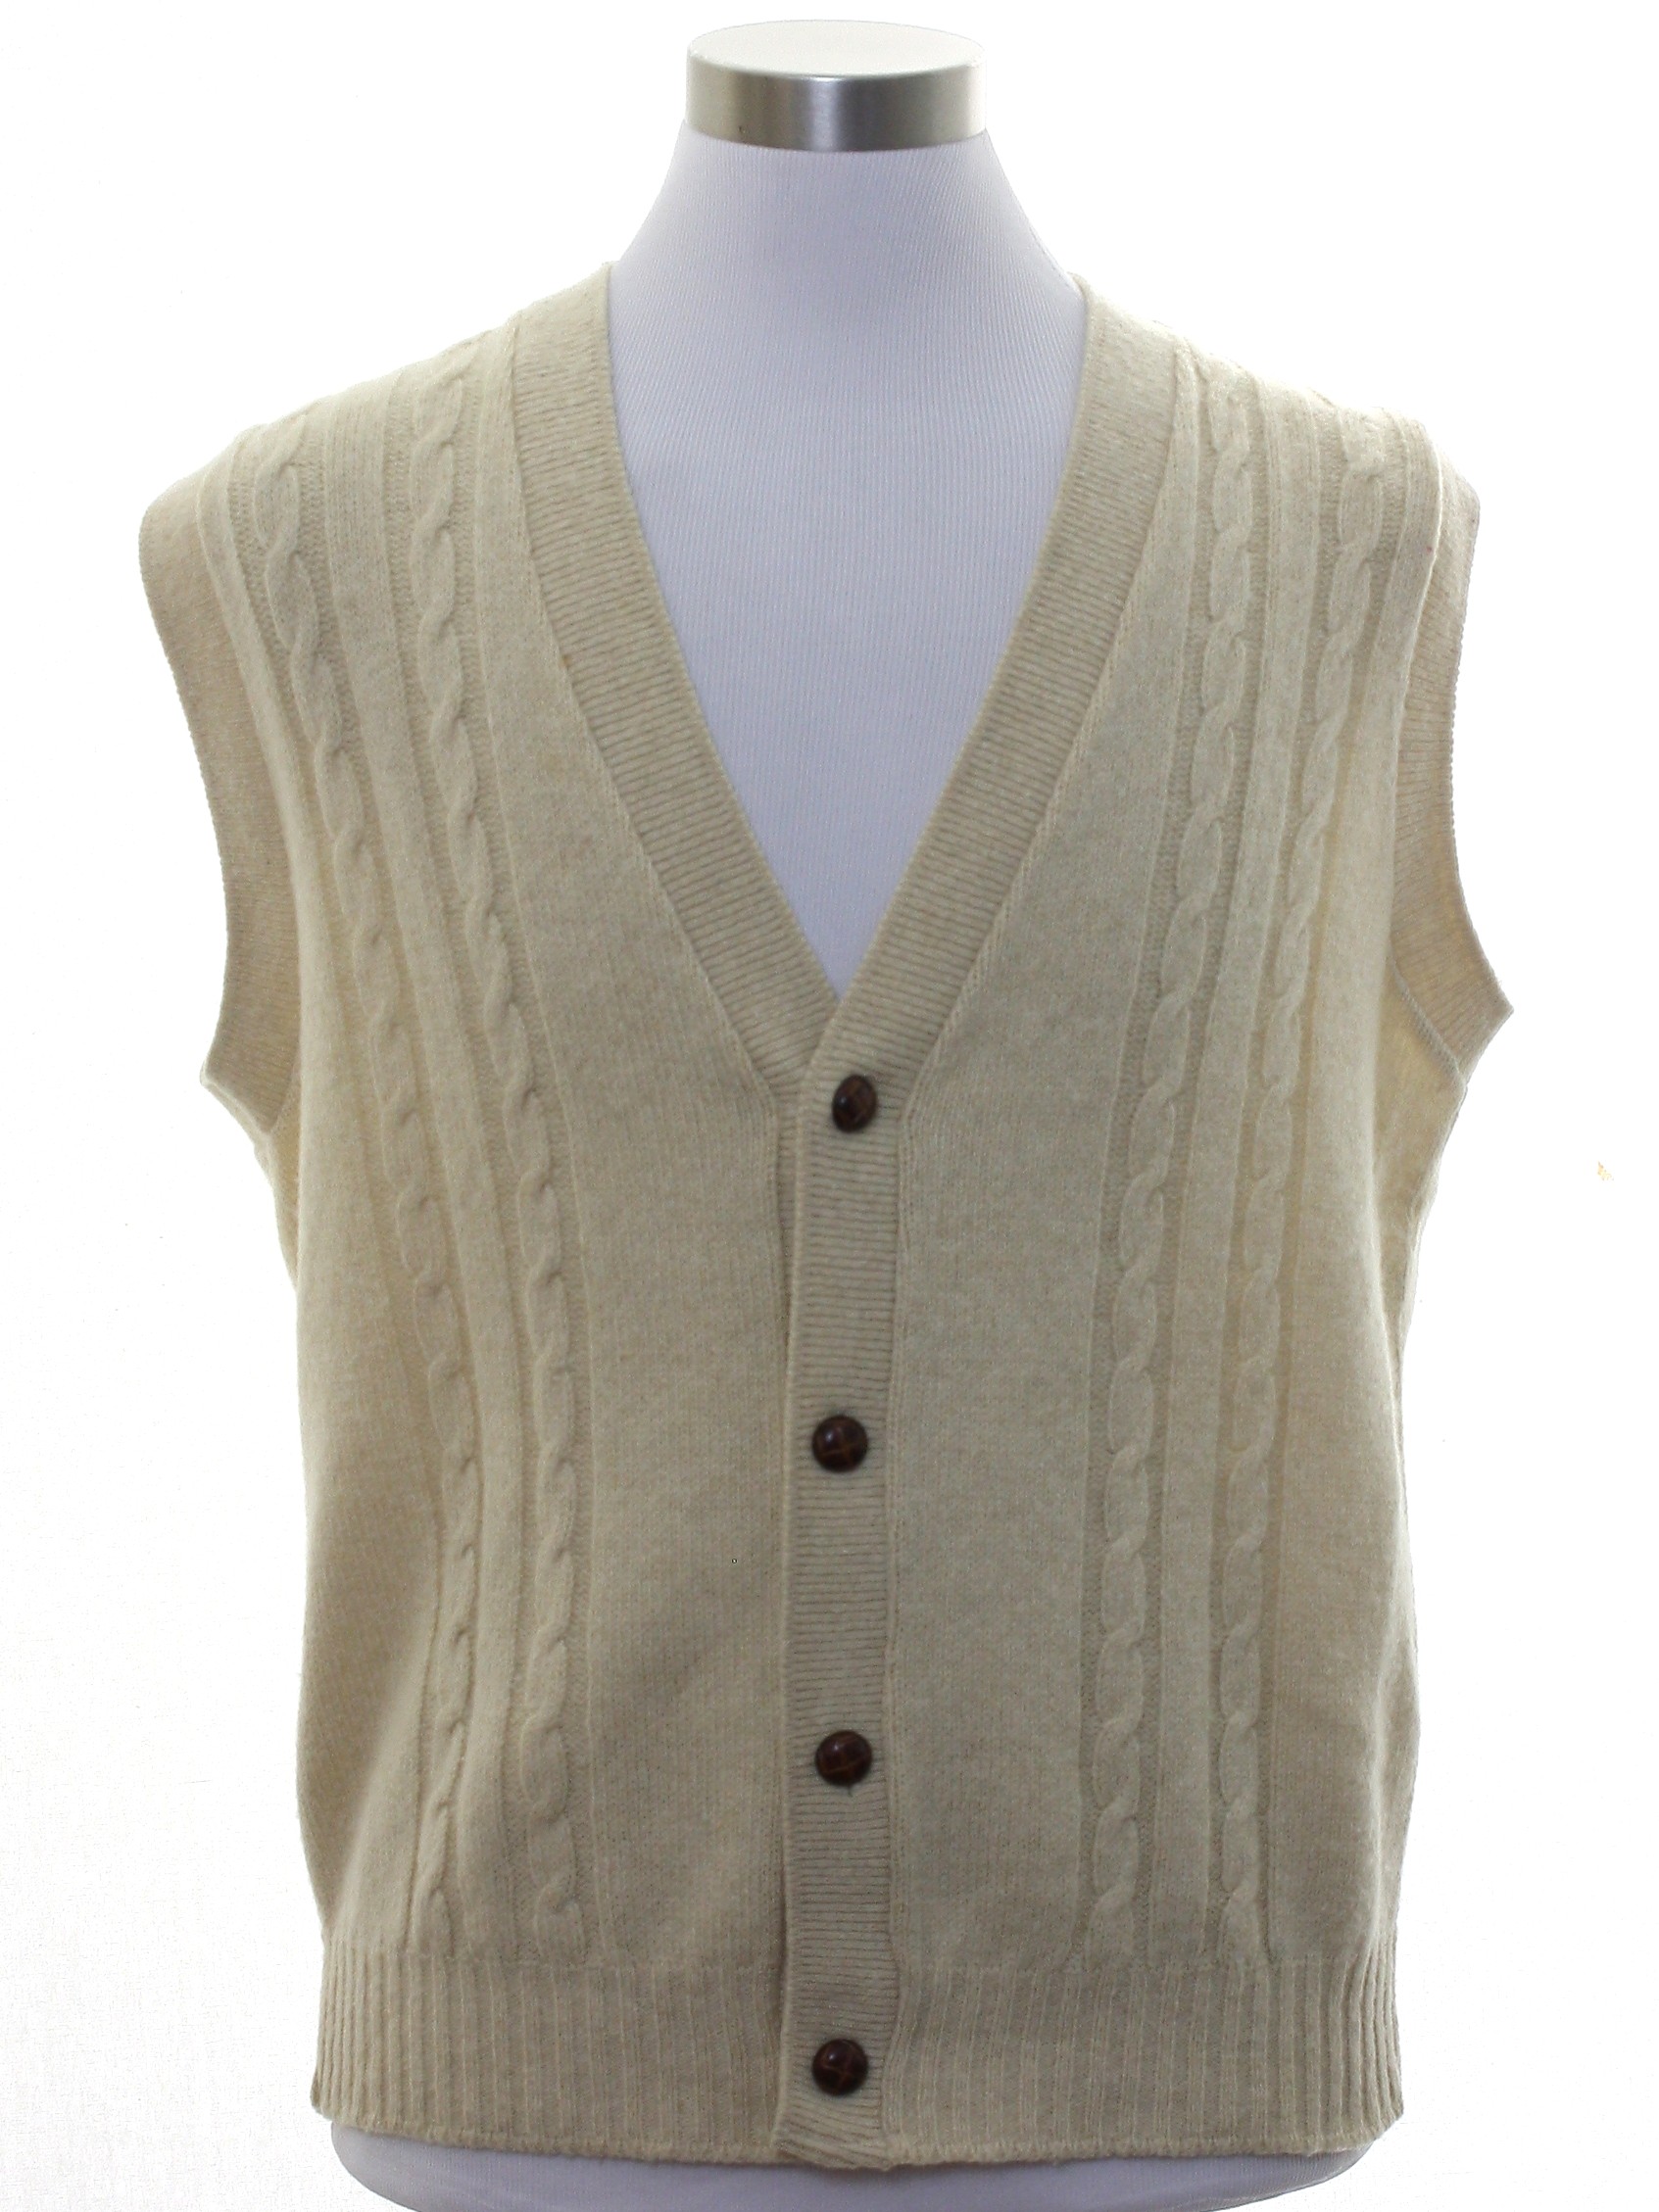 Retro 1970's Sweater (Jantzen) : 70s -Jantzen- Mens beige acrylic knit ...